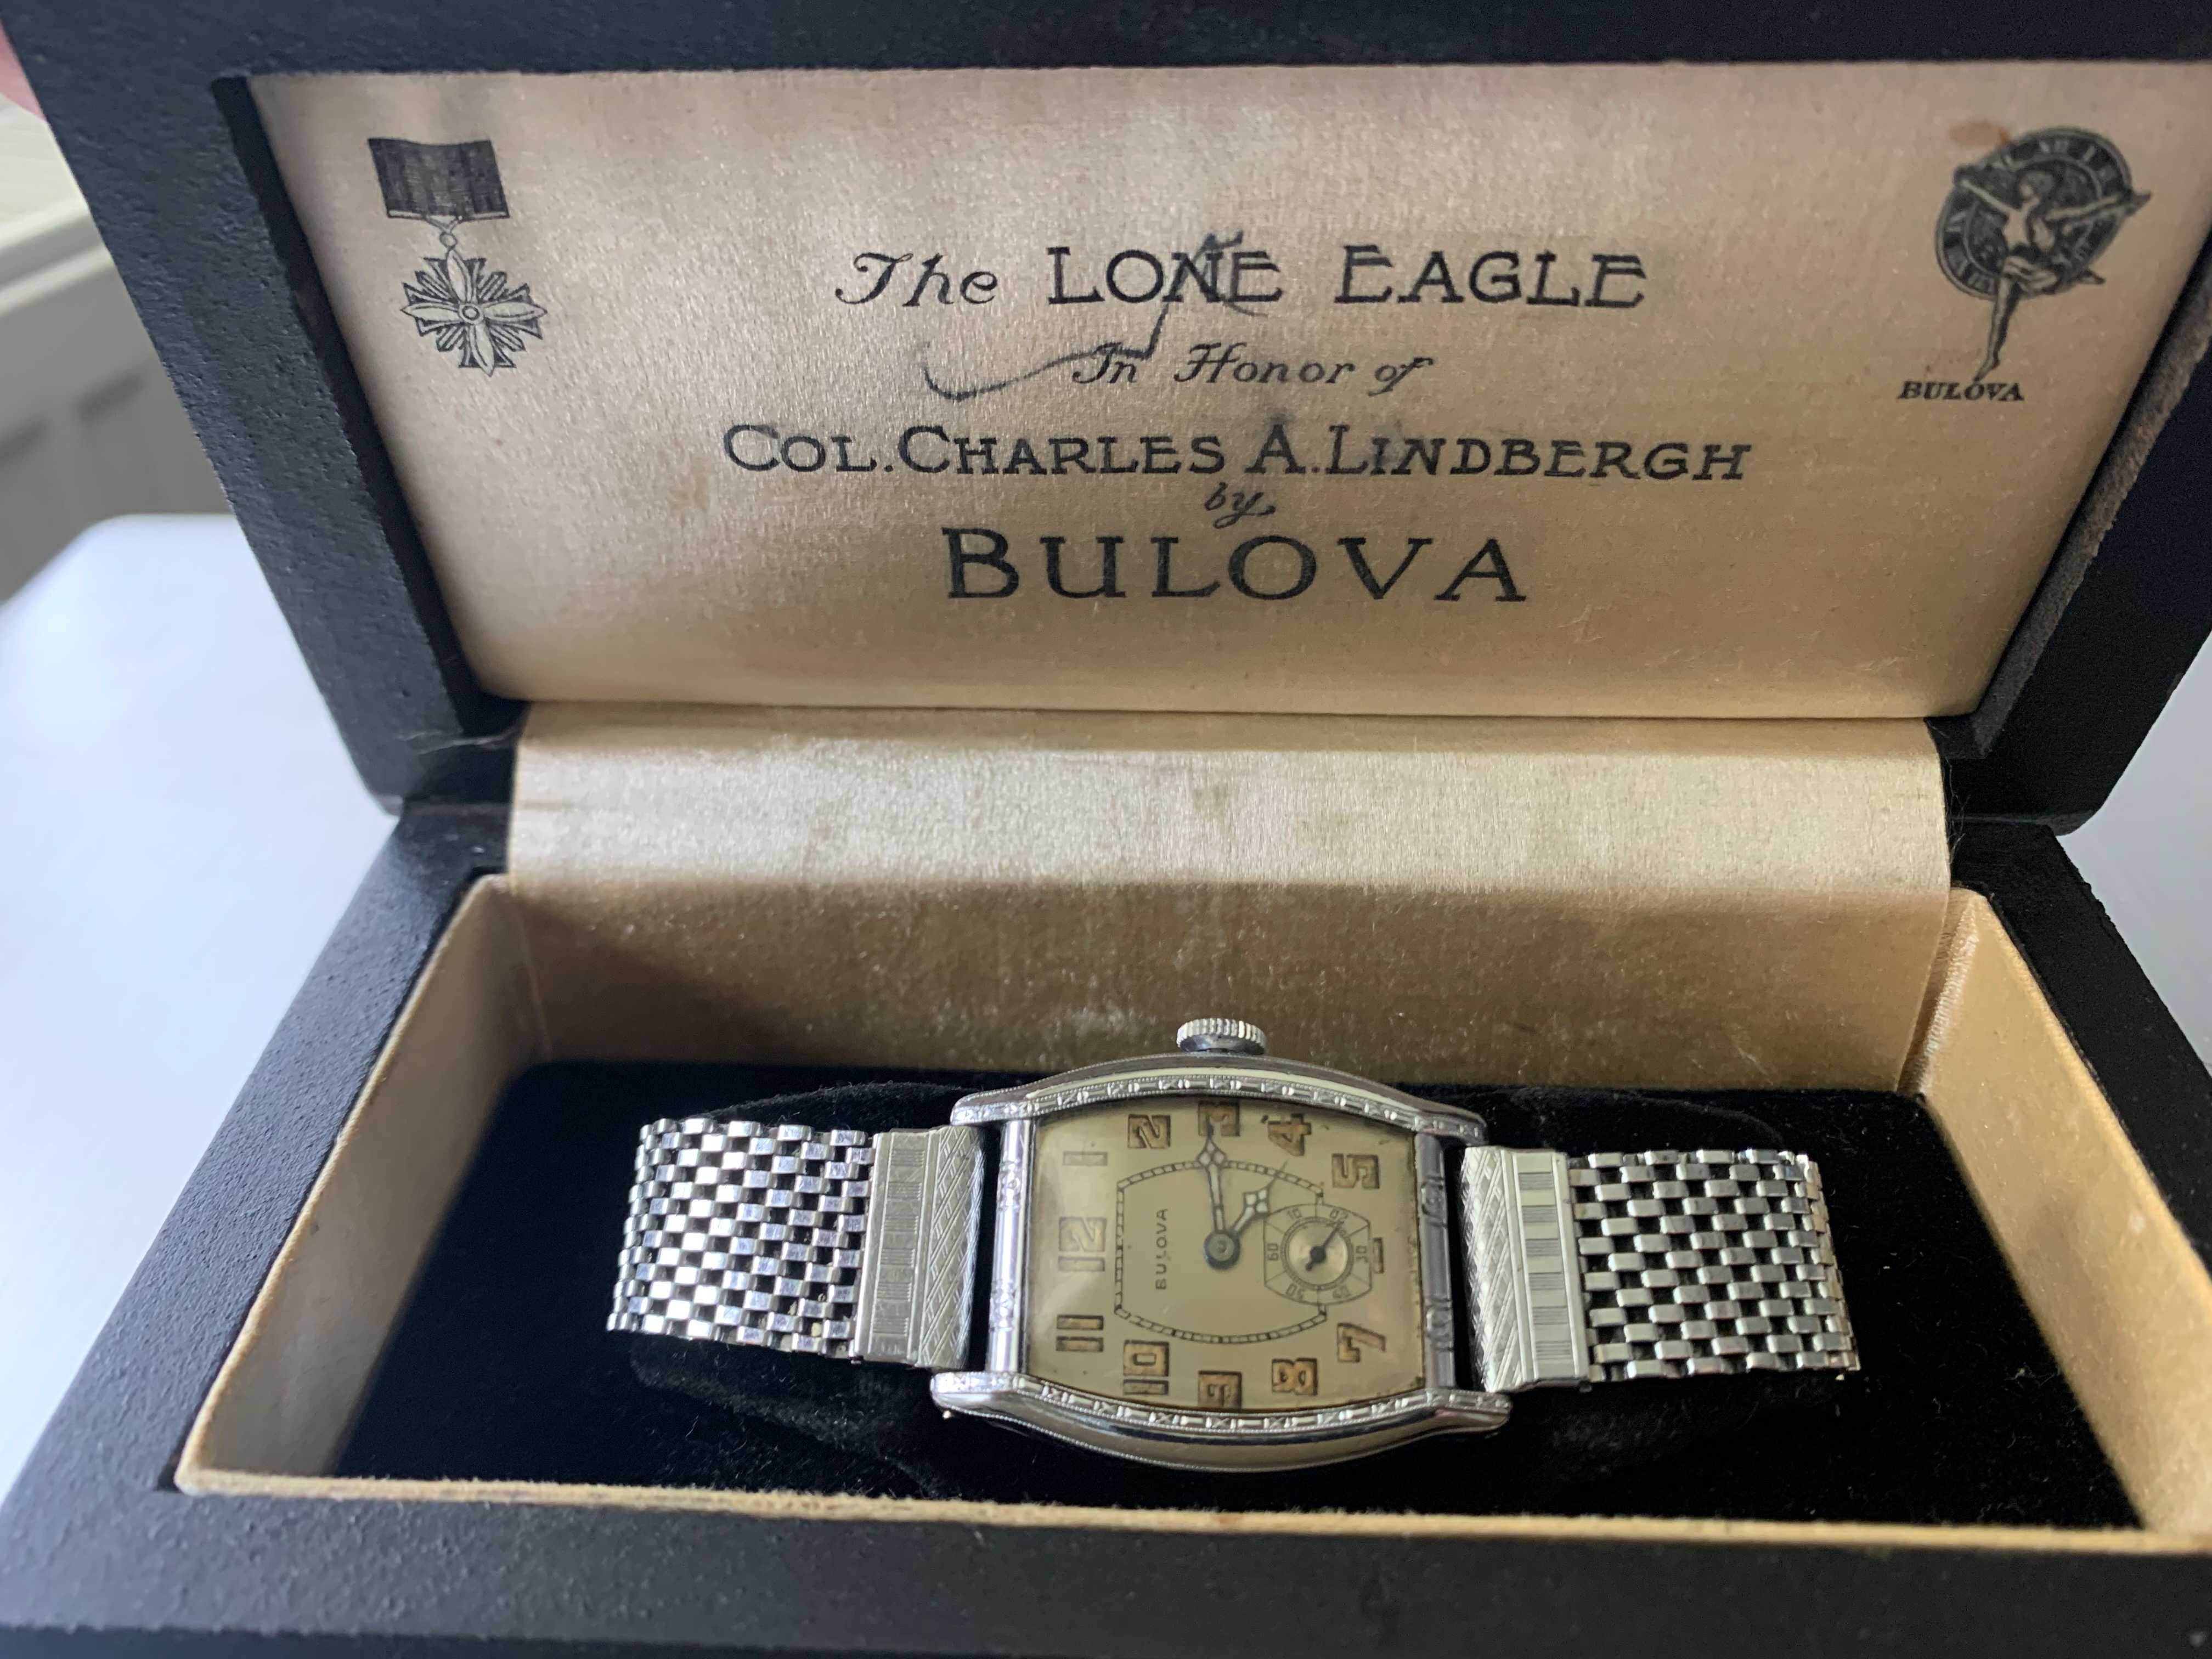 Zegarek marki Bulova model "Lone Eagle II" z 1929 roku